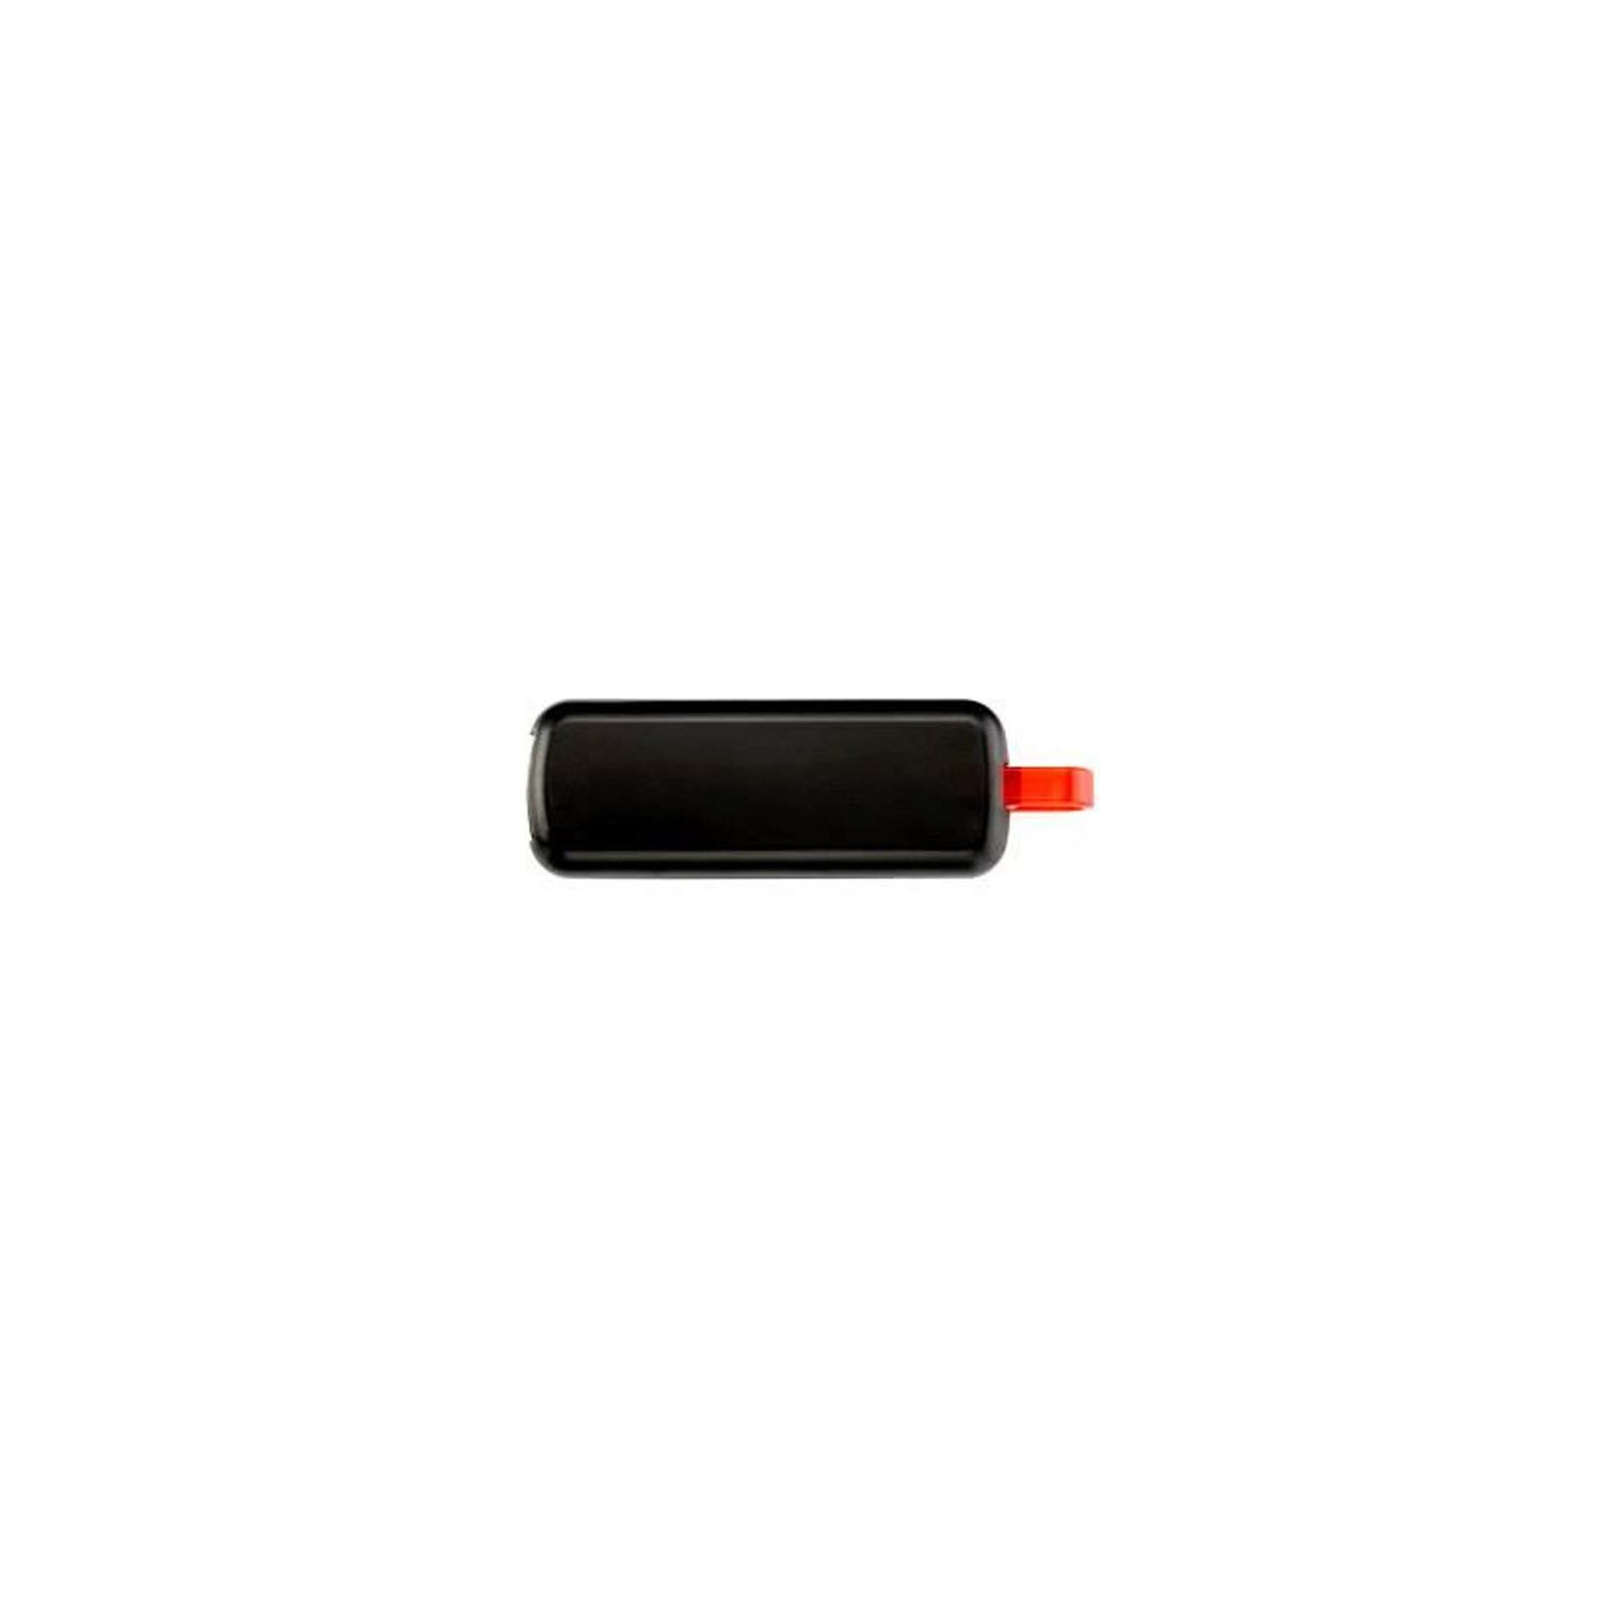 USB флеш накопитель Apacer 16GB AH326 black USB 2.0 (AP16GAH326B-1) изображение 2